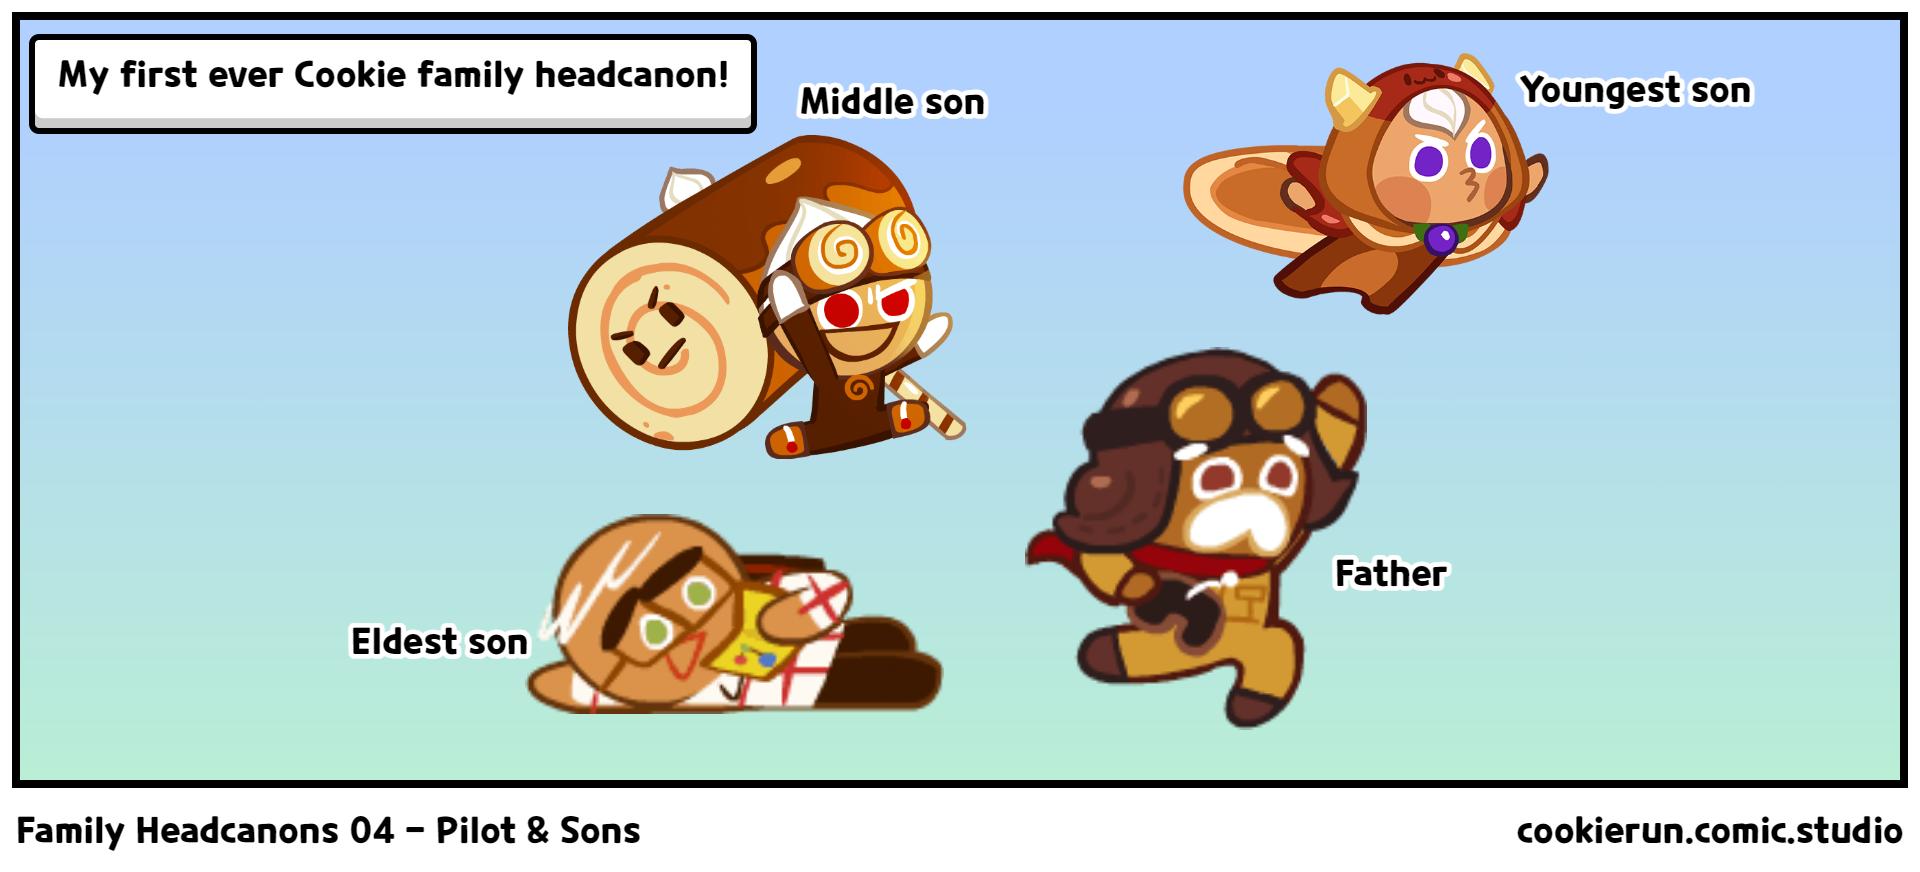 Family Headcanons 04 - Pilot & Sons